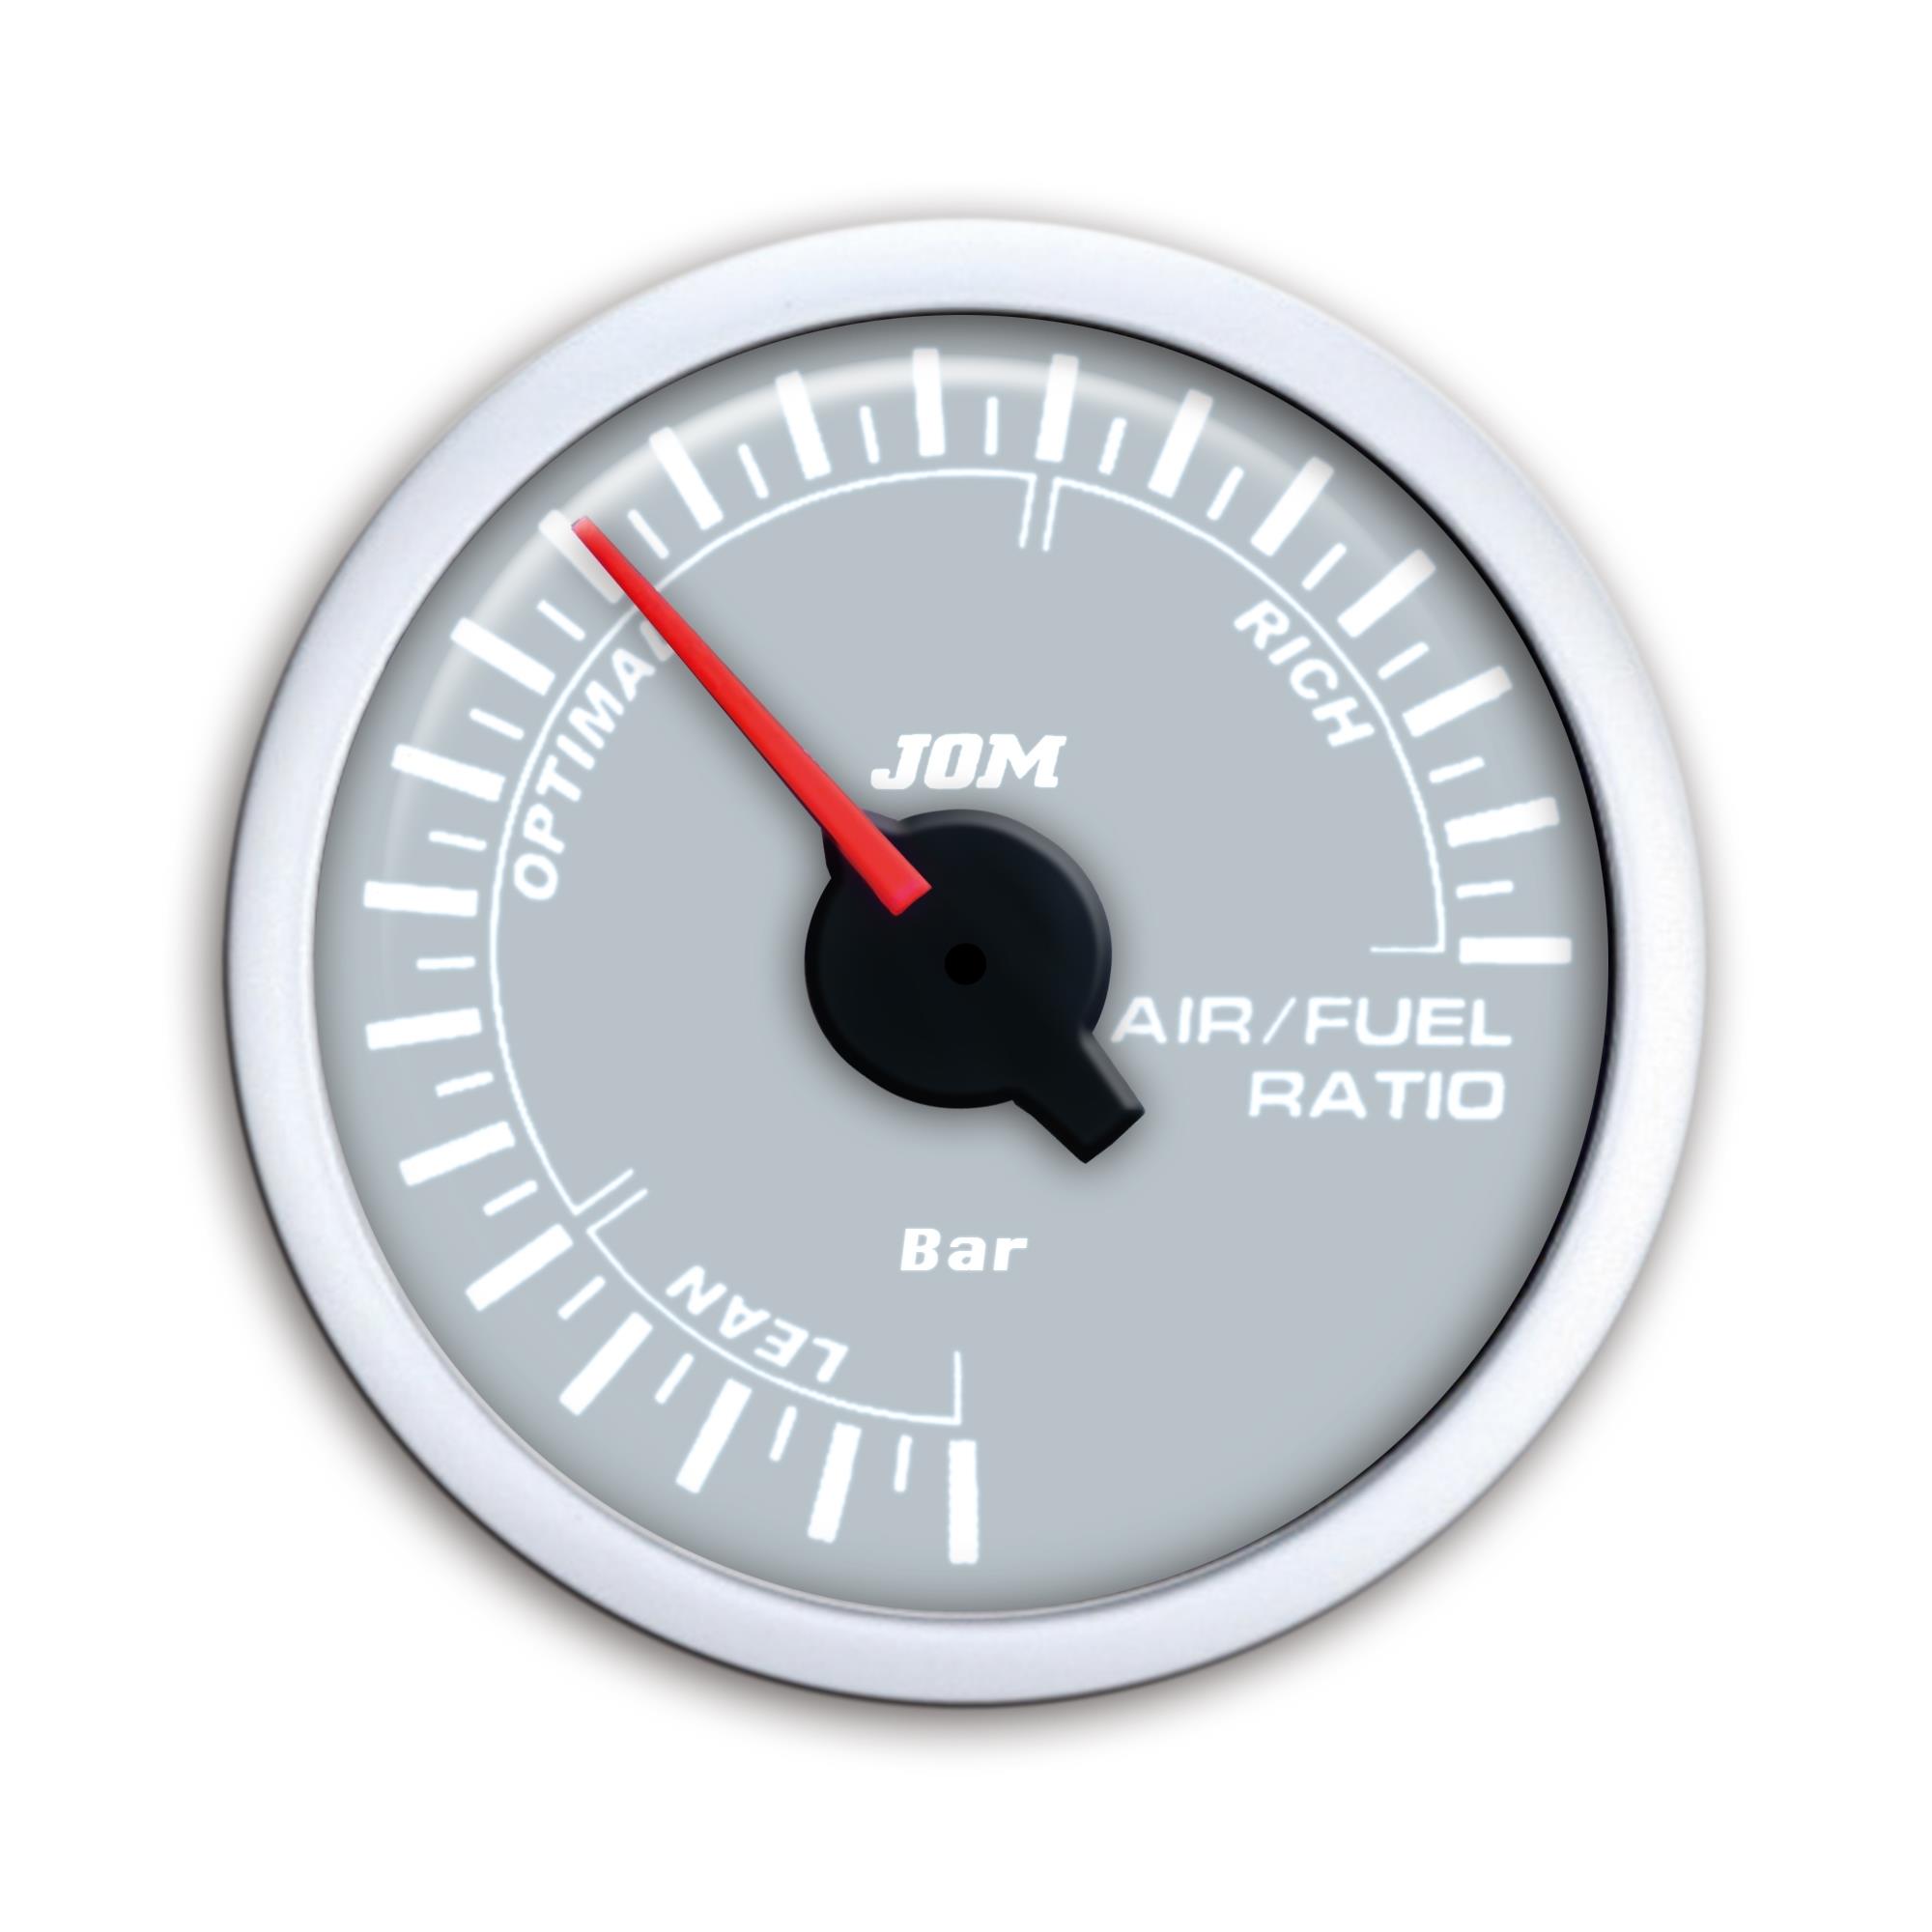 Bmw fuel gauge calibration #7